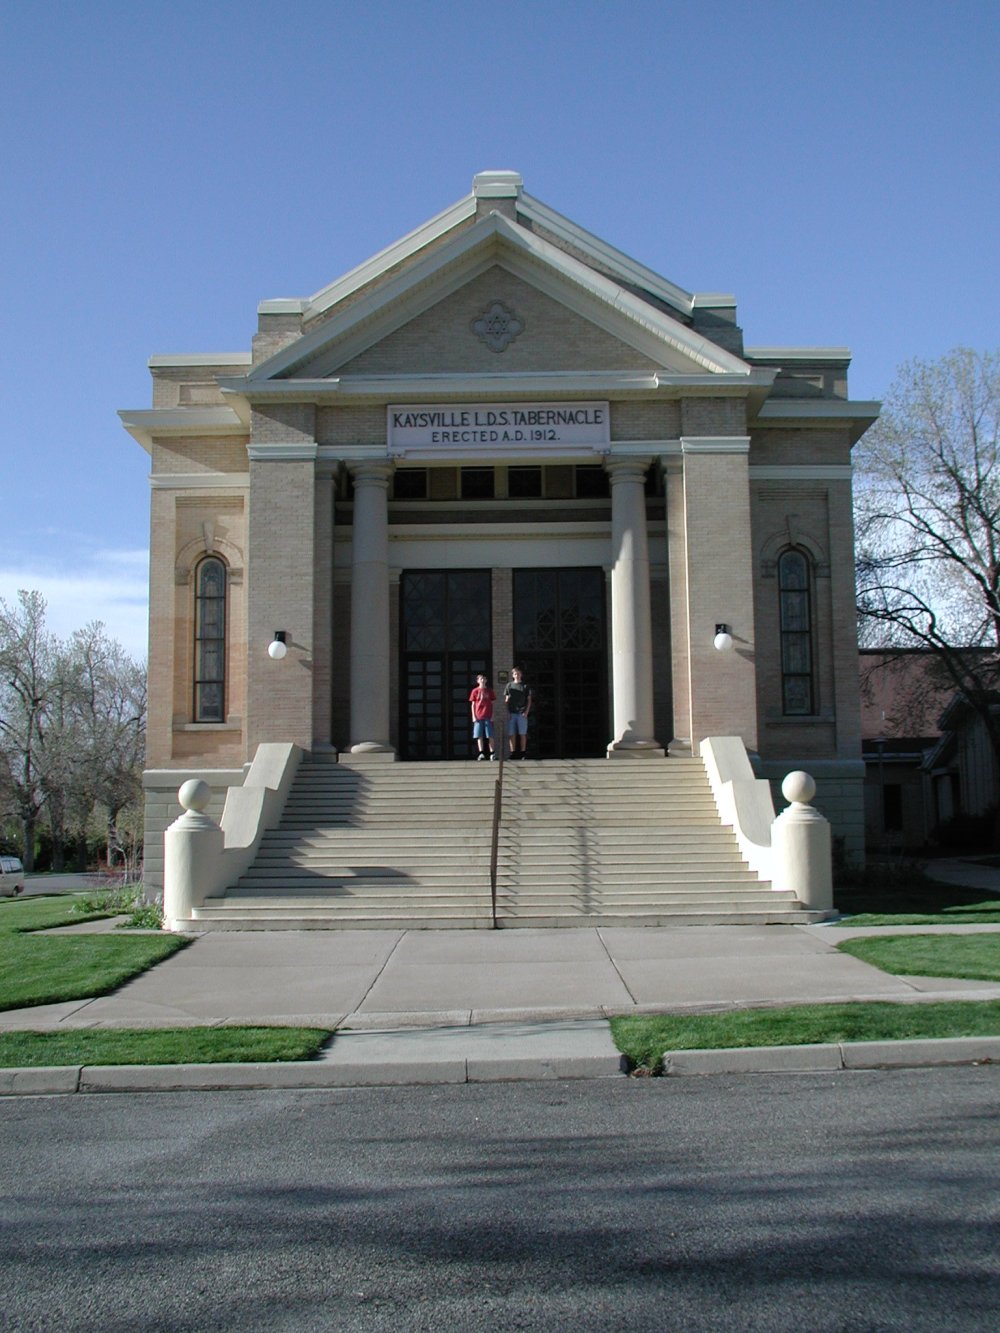 Mormon Kaysville Tabernacle